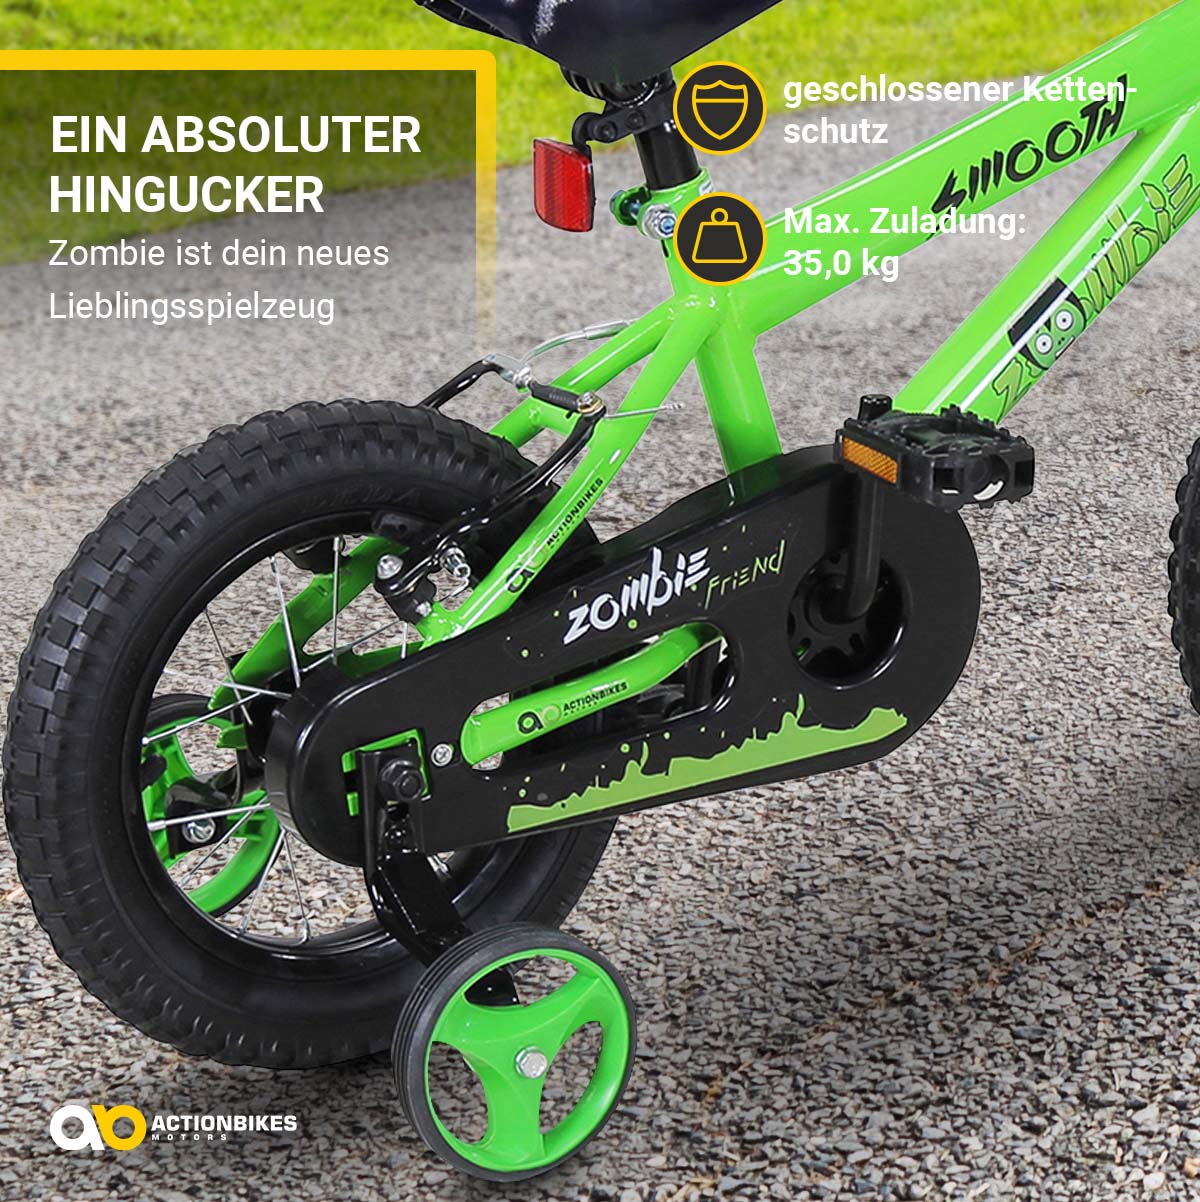 https://www.miweba.de/media/image/89/91/a9/03-kinderfahrrad-12-zoll-gruen-actionbikes-motors-zombie-hingucker.jpg